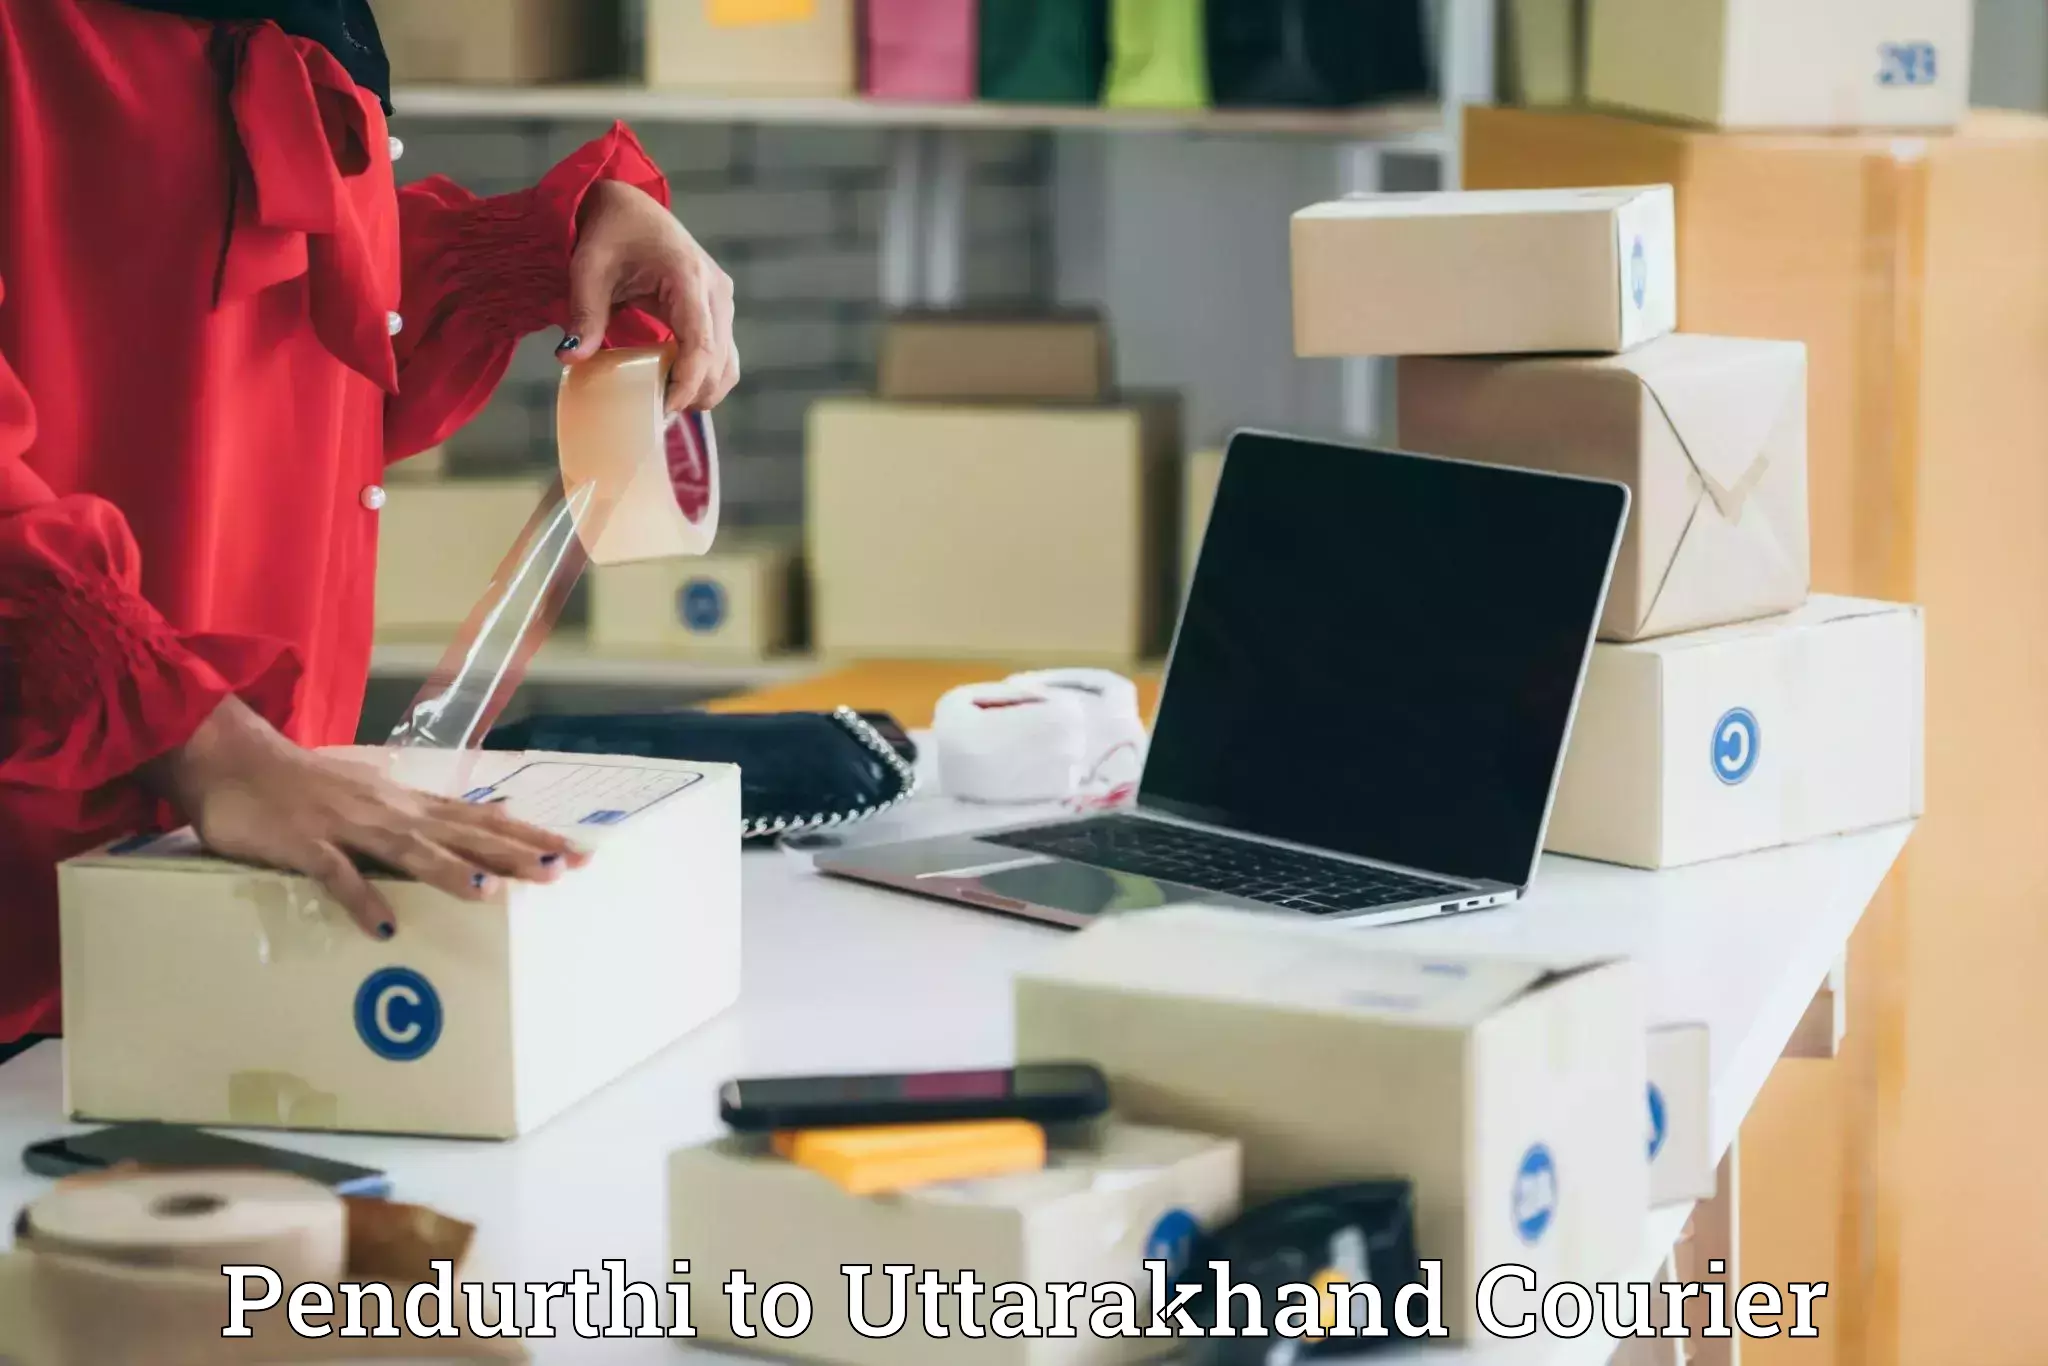 Full-service courier options Pendurthi to Uttarakhand